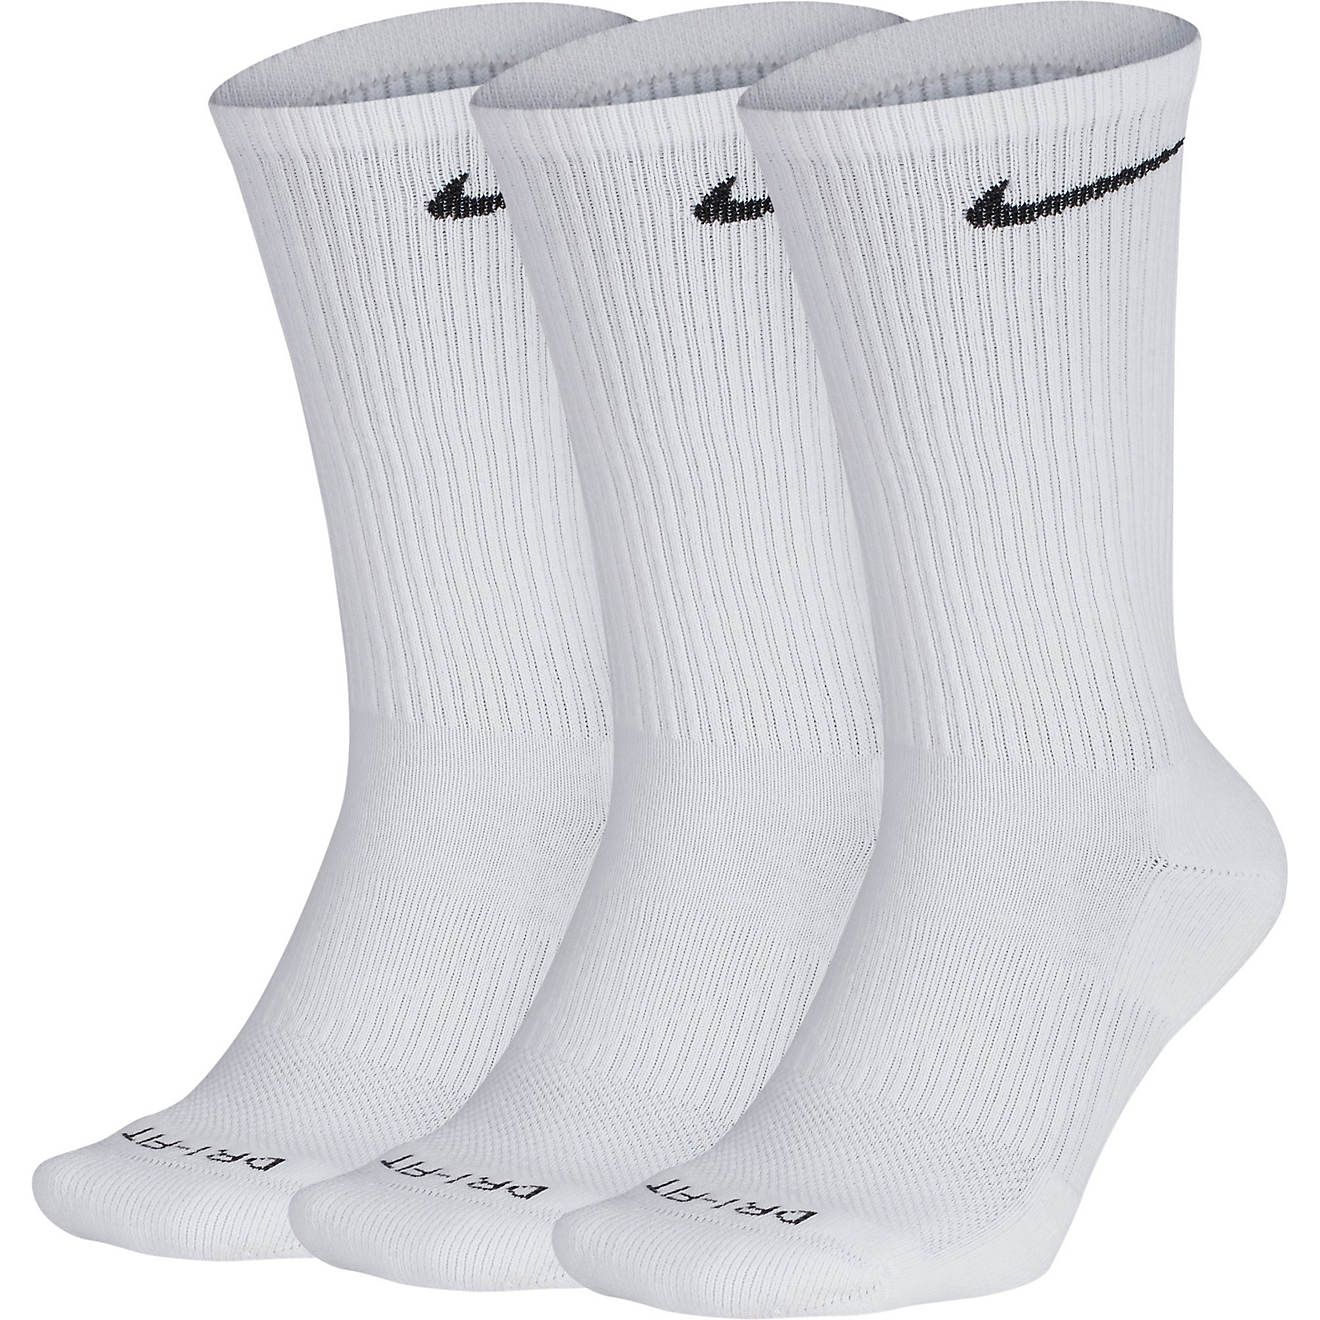 Nike Plus Cushion Training Crew Socks 3 Pack | Academy Sports + Outdoor Affiliate